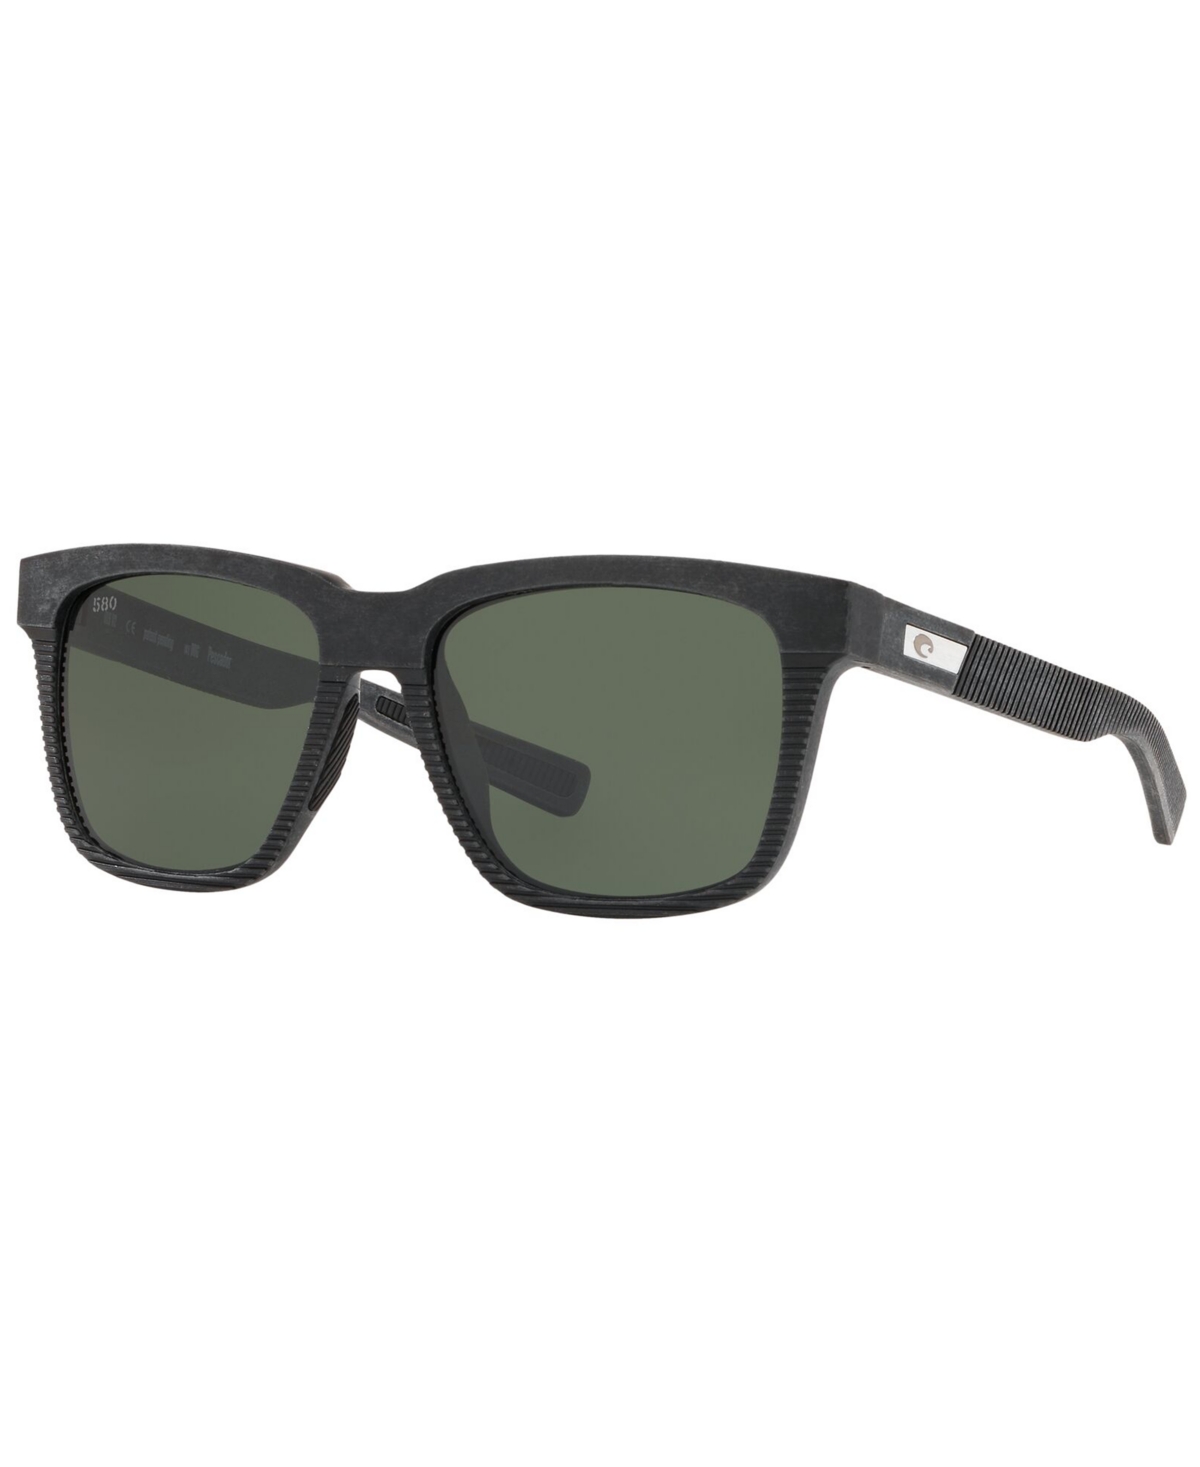 Men's Polarized Sunglasses, Pescador 55 - BLACK/GREY